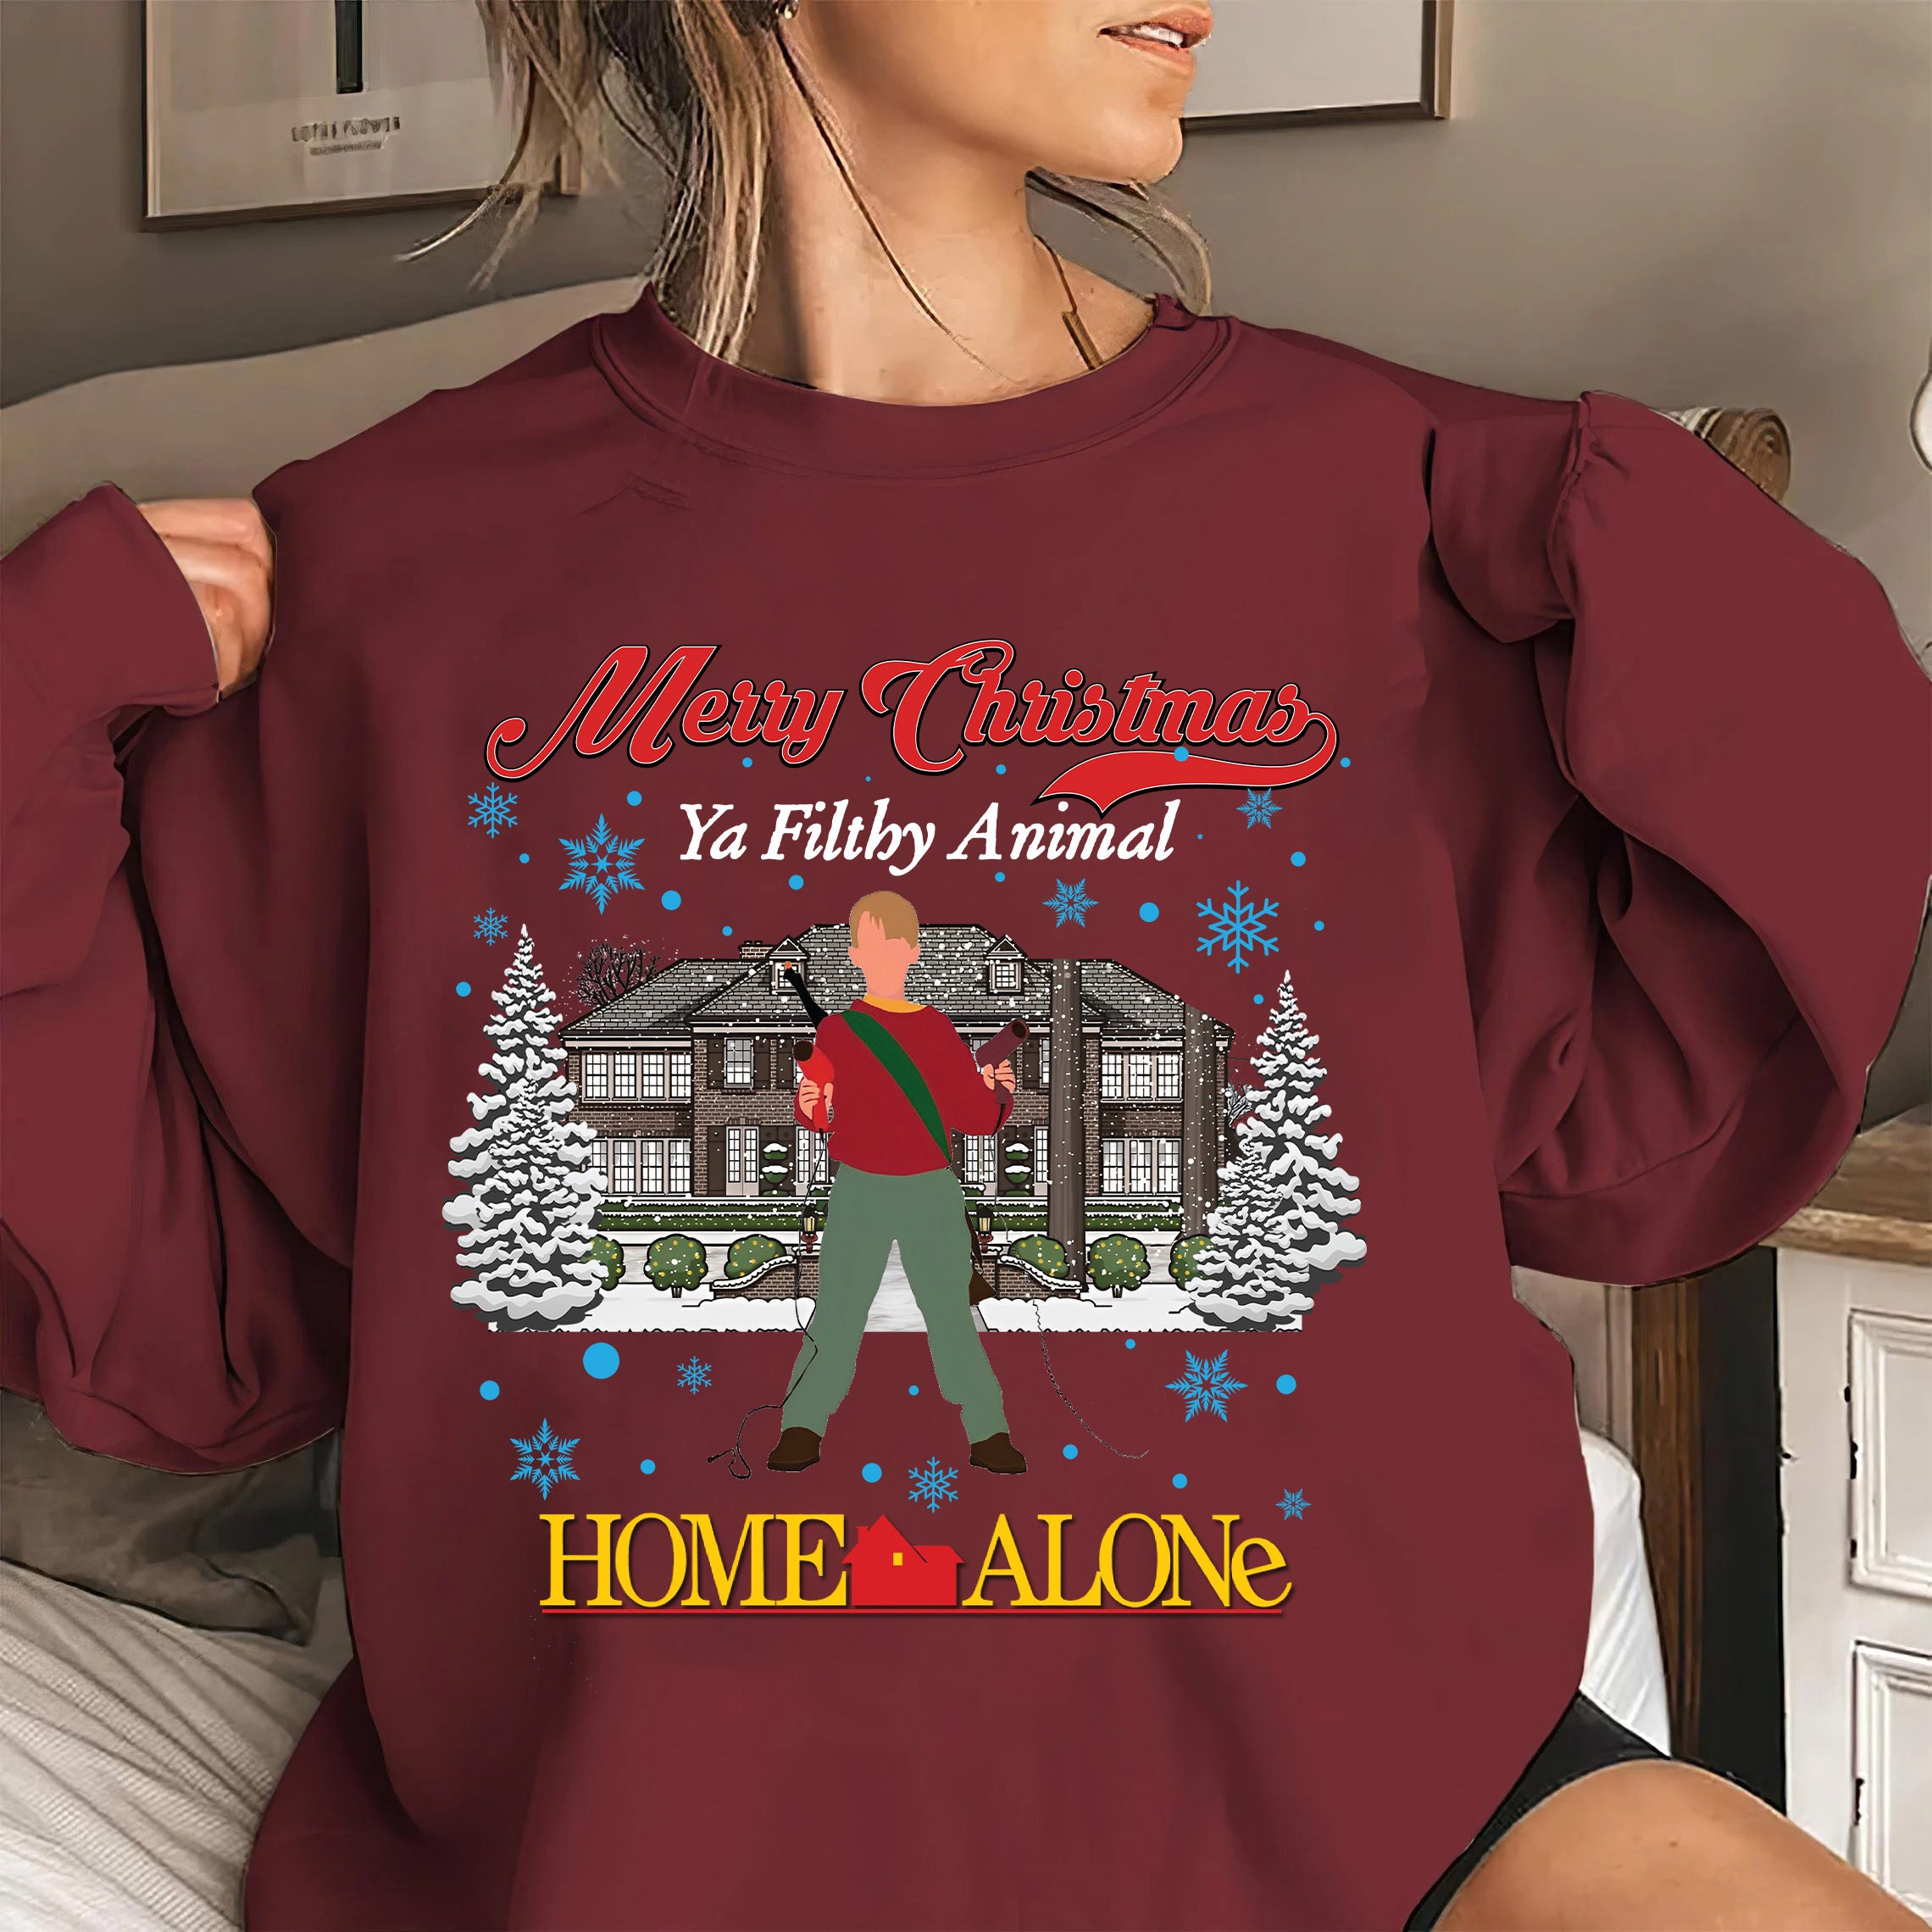 Discover Home Alone Christmas Sweatshirt, Christmas Movie Sweatshirt, Home Security Shirt, Kevin Christmas Sweatshirt, Xmas Sweatshirt, Movie Sweatshirts